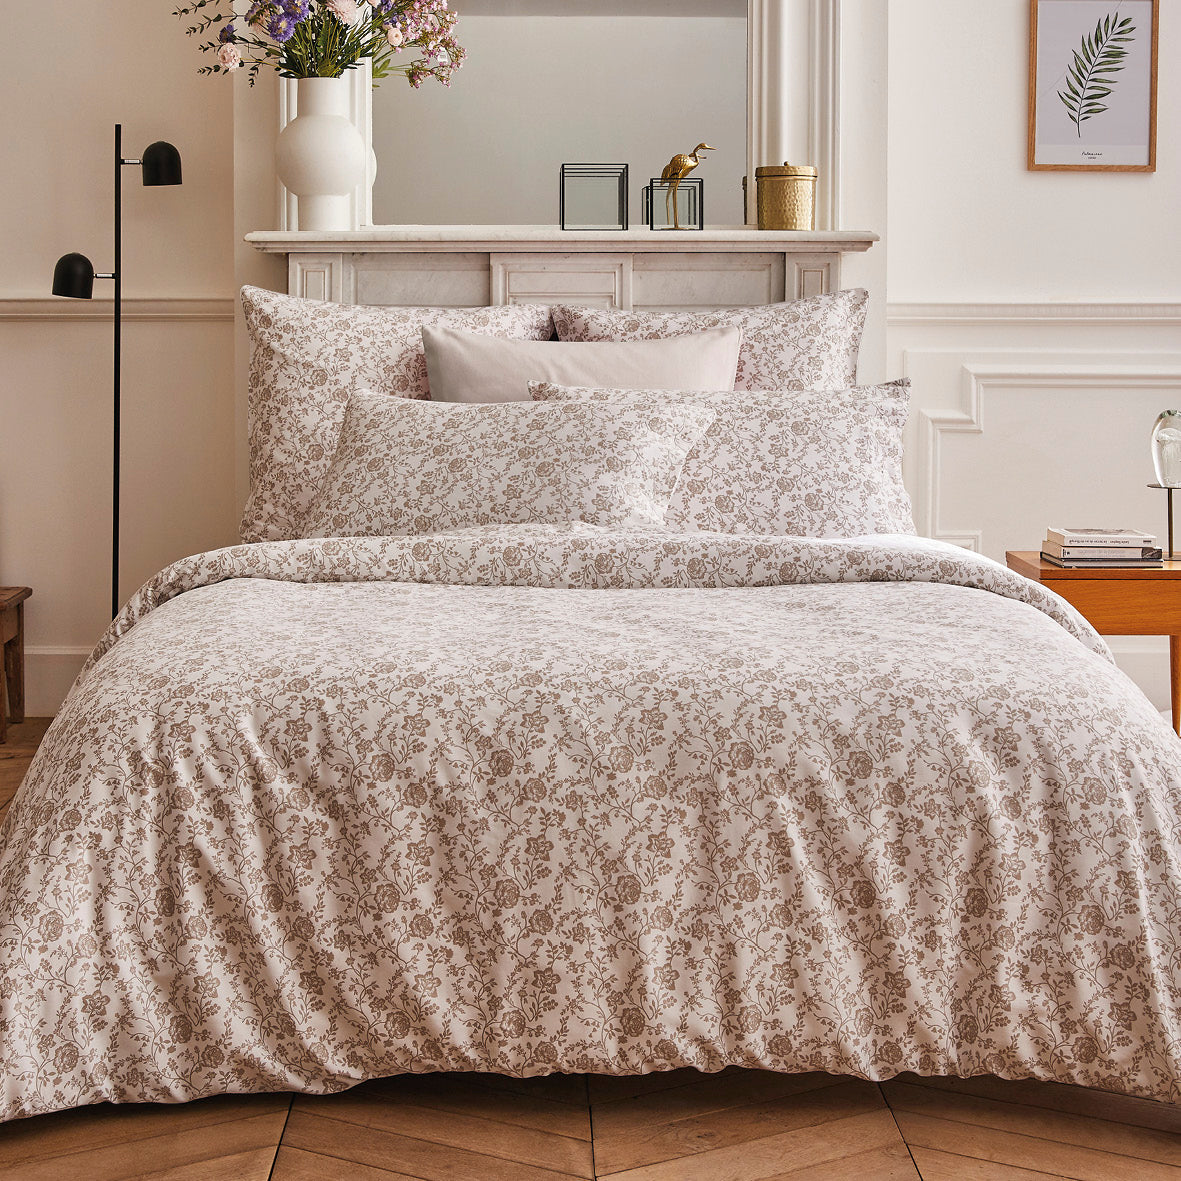 Duvet cover + pillowcase(s) cotton satin - Parterre de Roses white/taupe